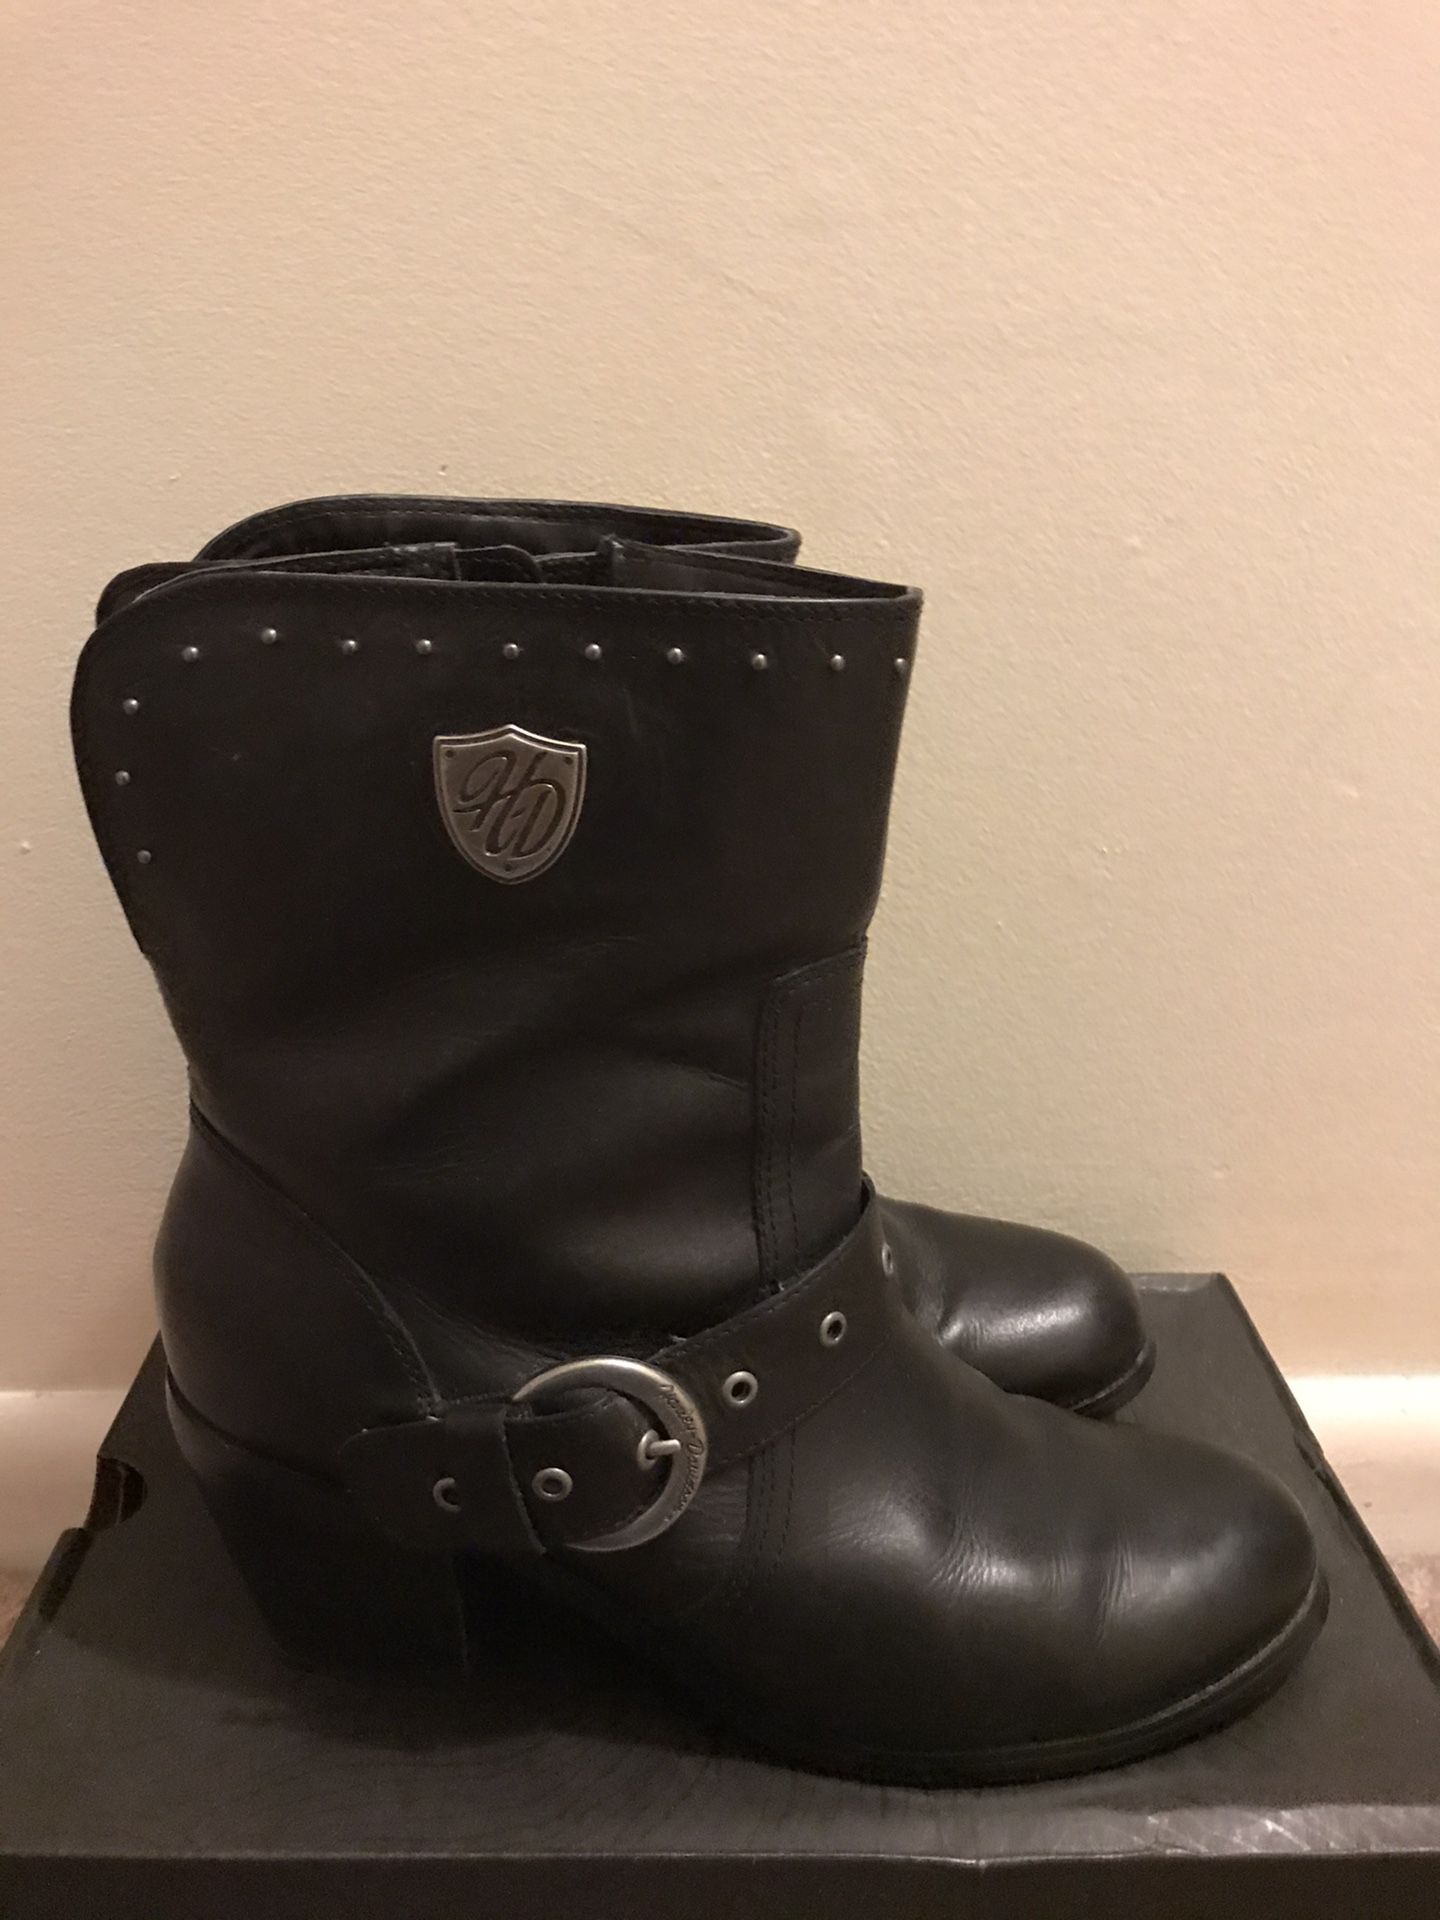 Harley Davidson Women’s Leather Cheryl Boot Size 10